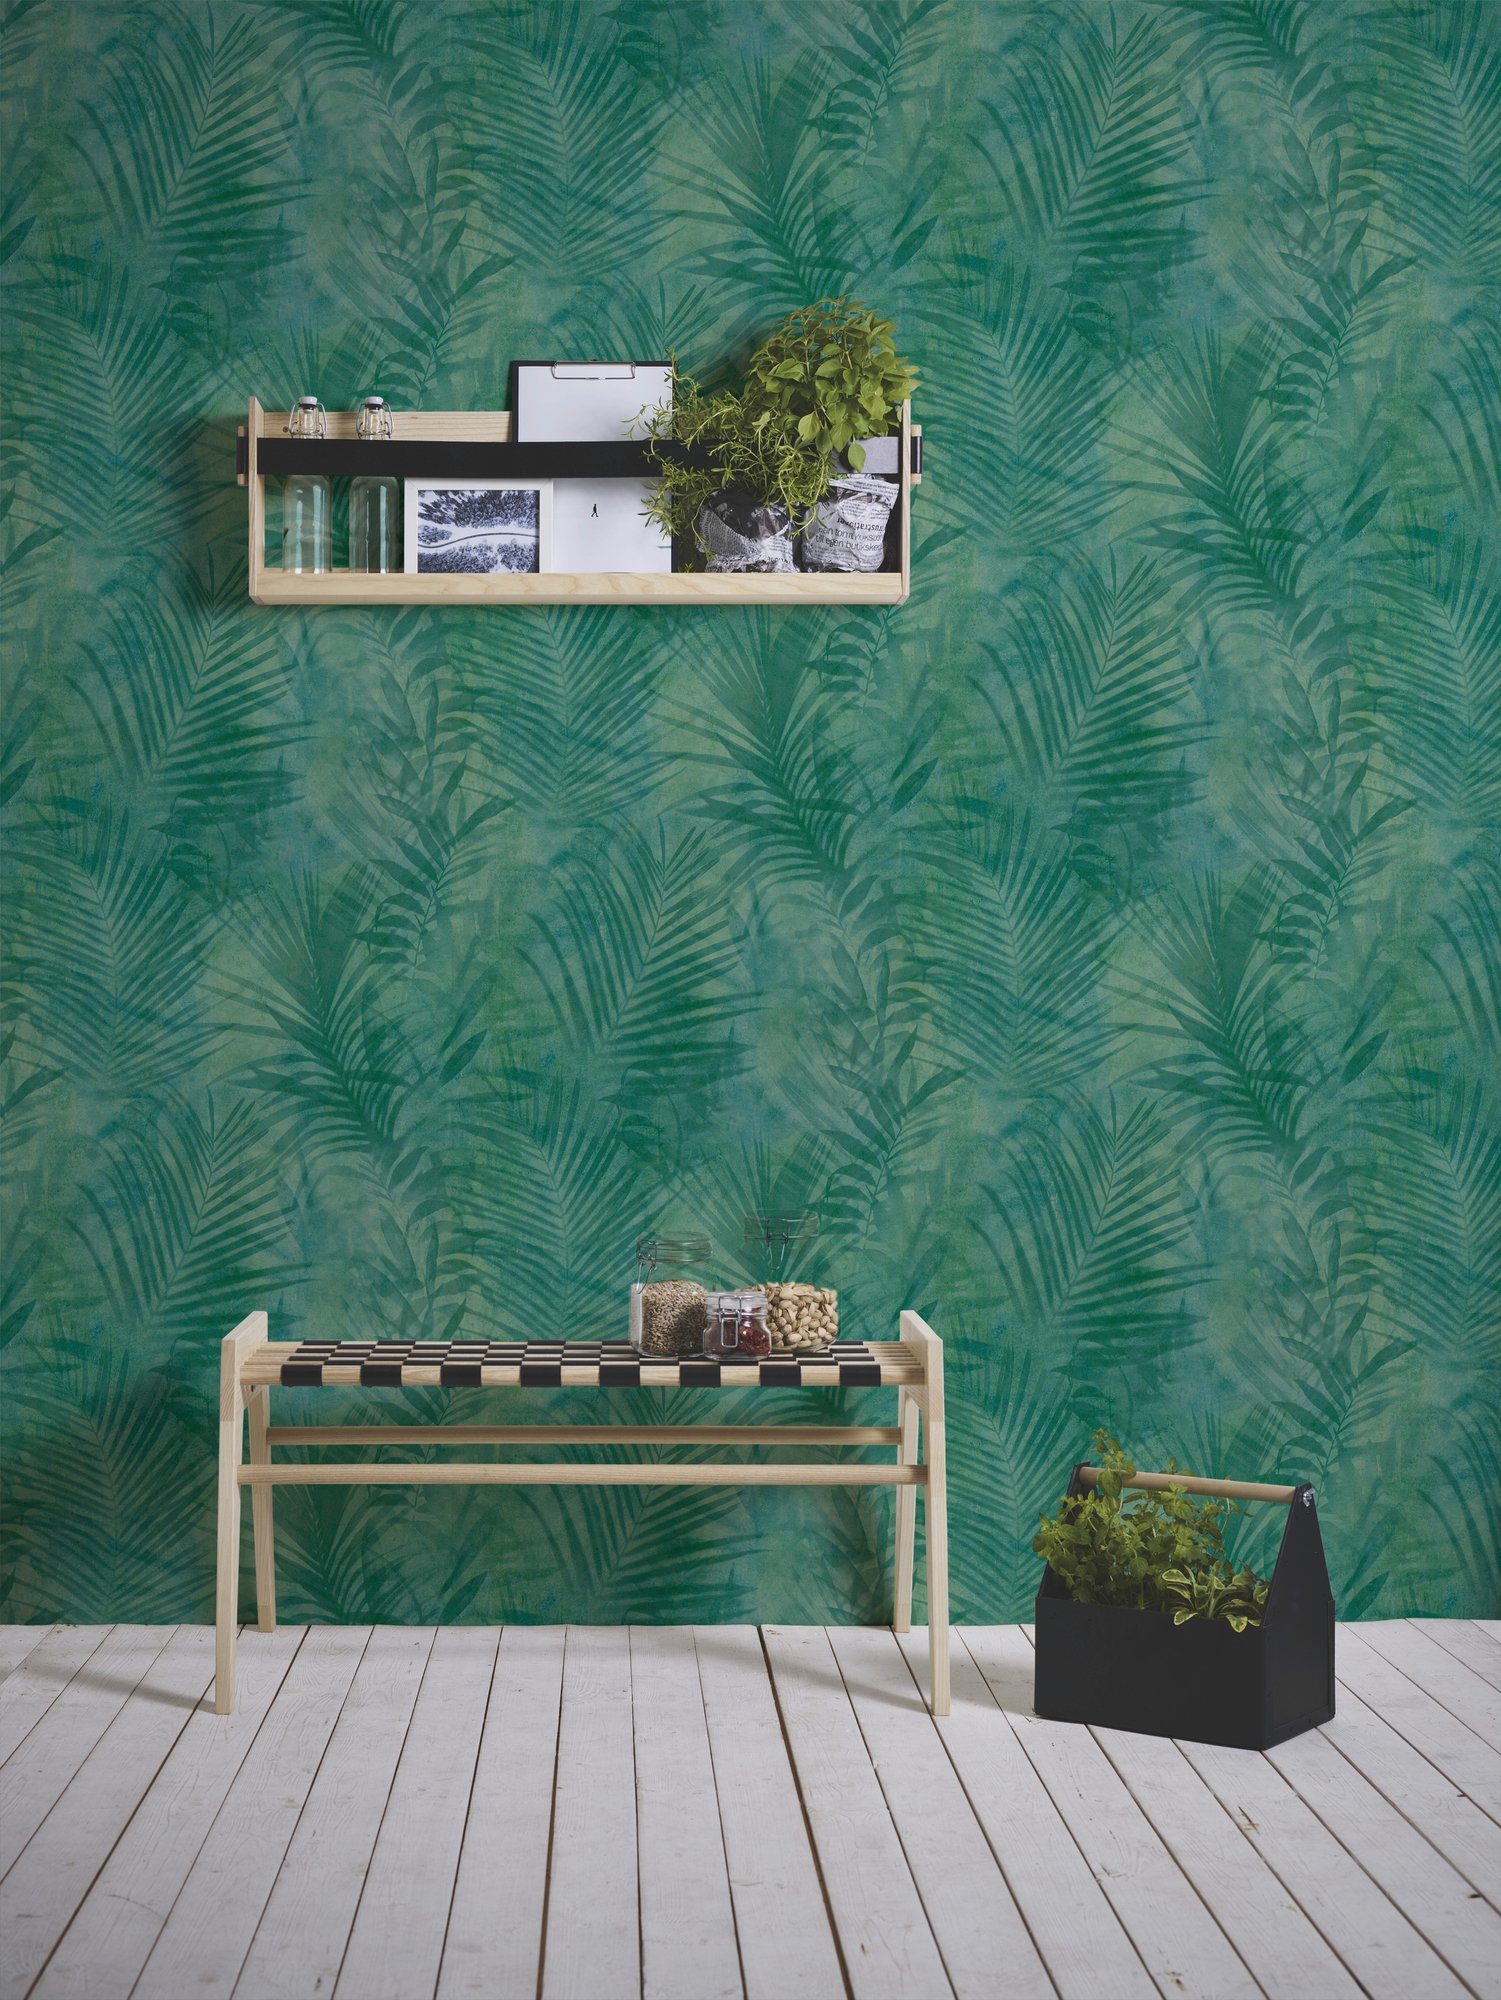 mit Palmen Palmenblättern, 2.0 floral, Bude Concret Création Tapete Vliestapete Neue Dschungeltapete A.S. grün/blau Tropical